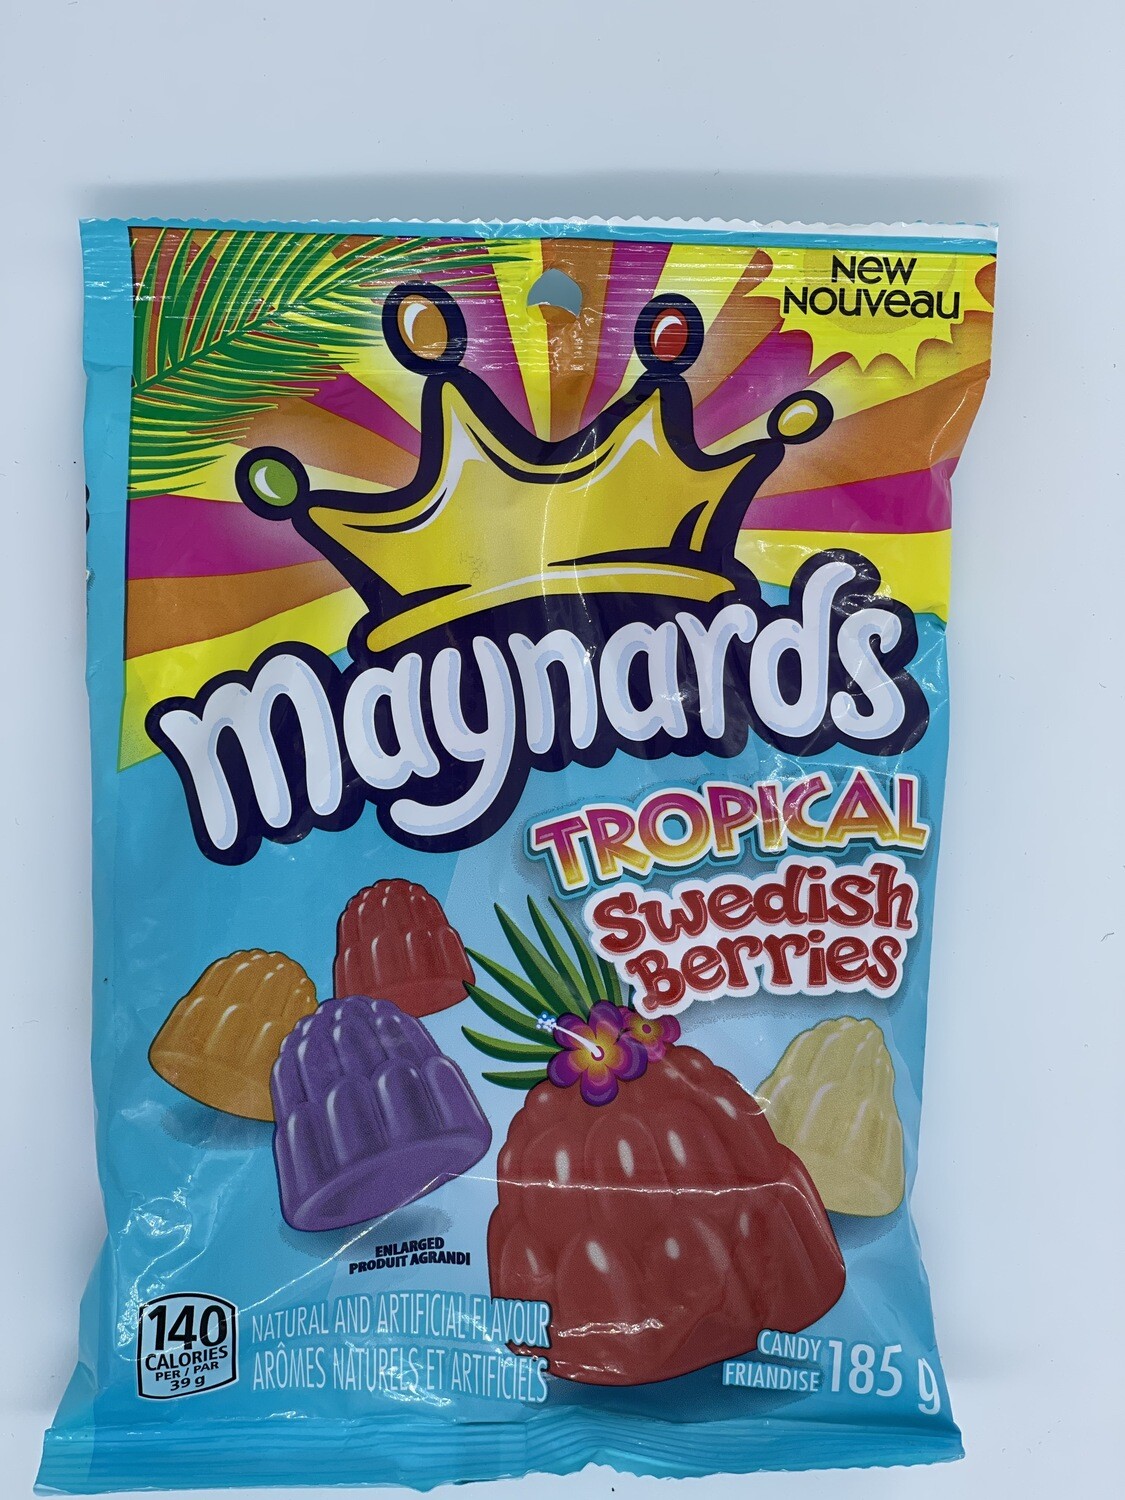 Maynards Tropical Swedish Berry Candy